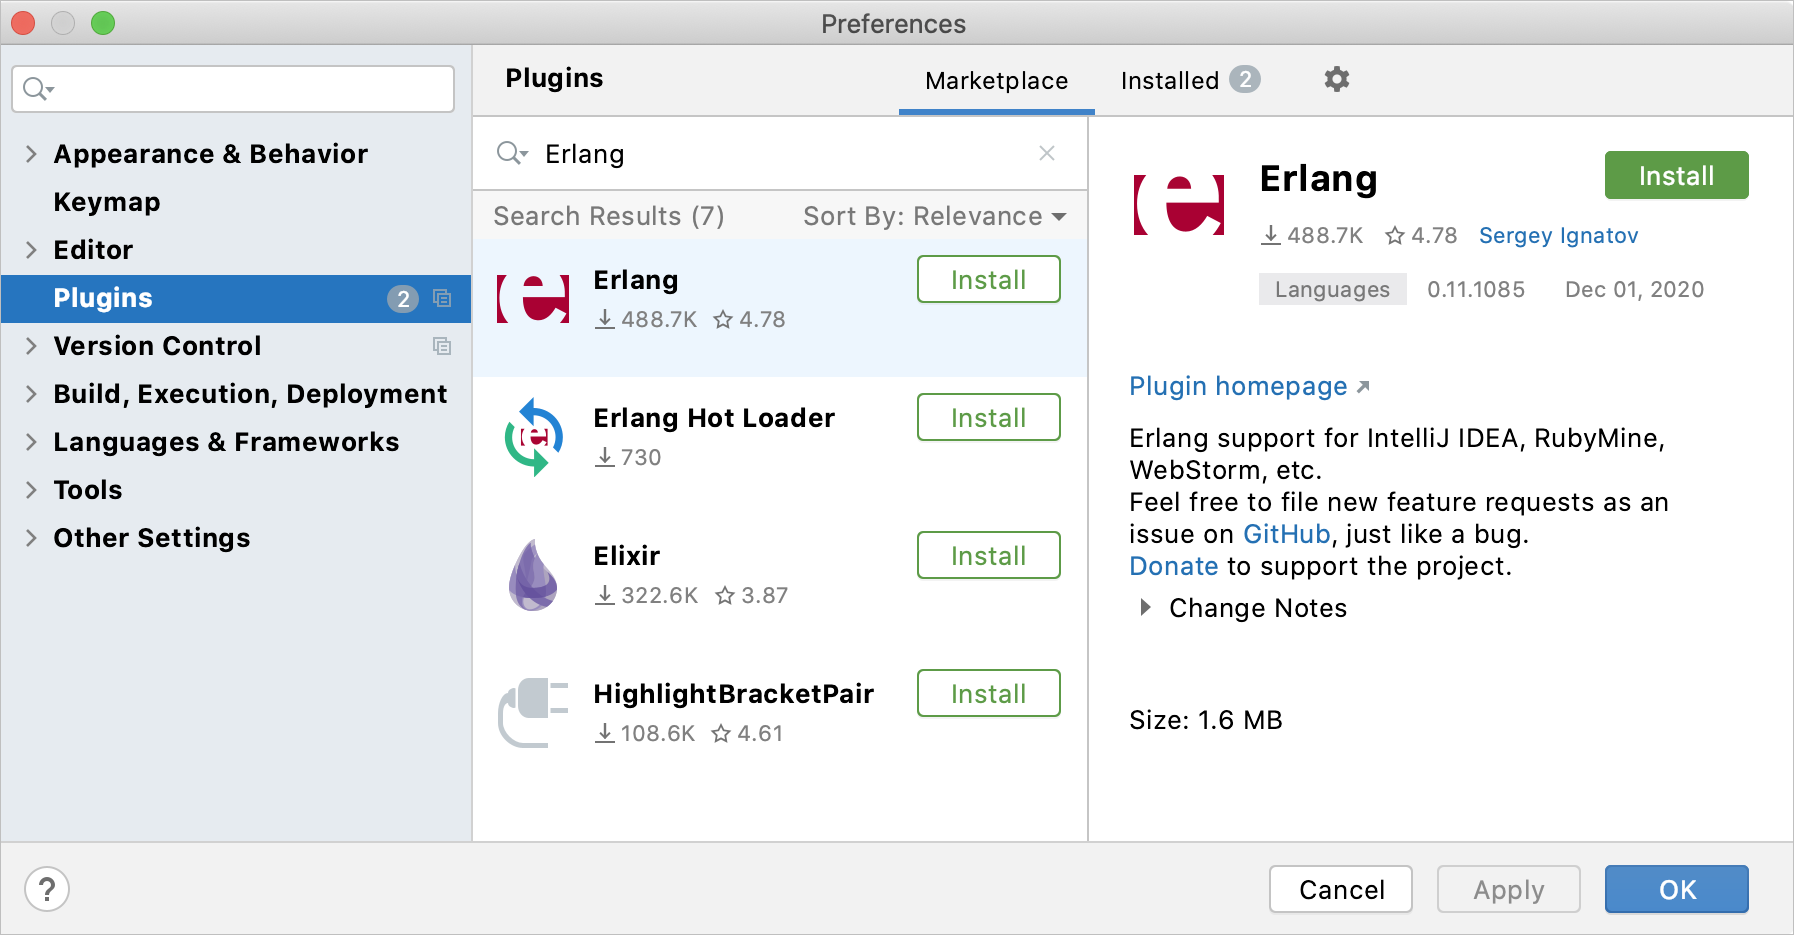 Installing the Erlang plugin